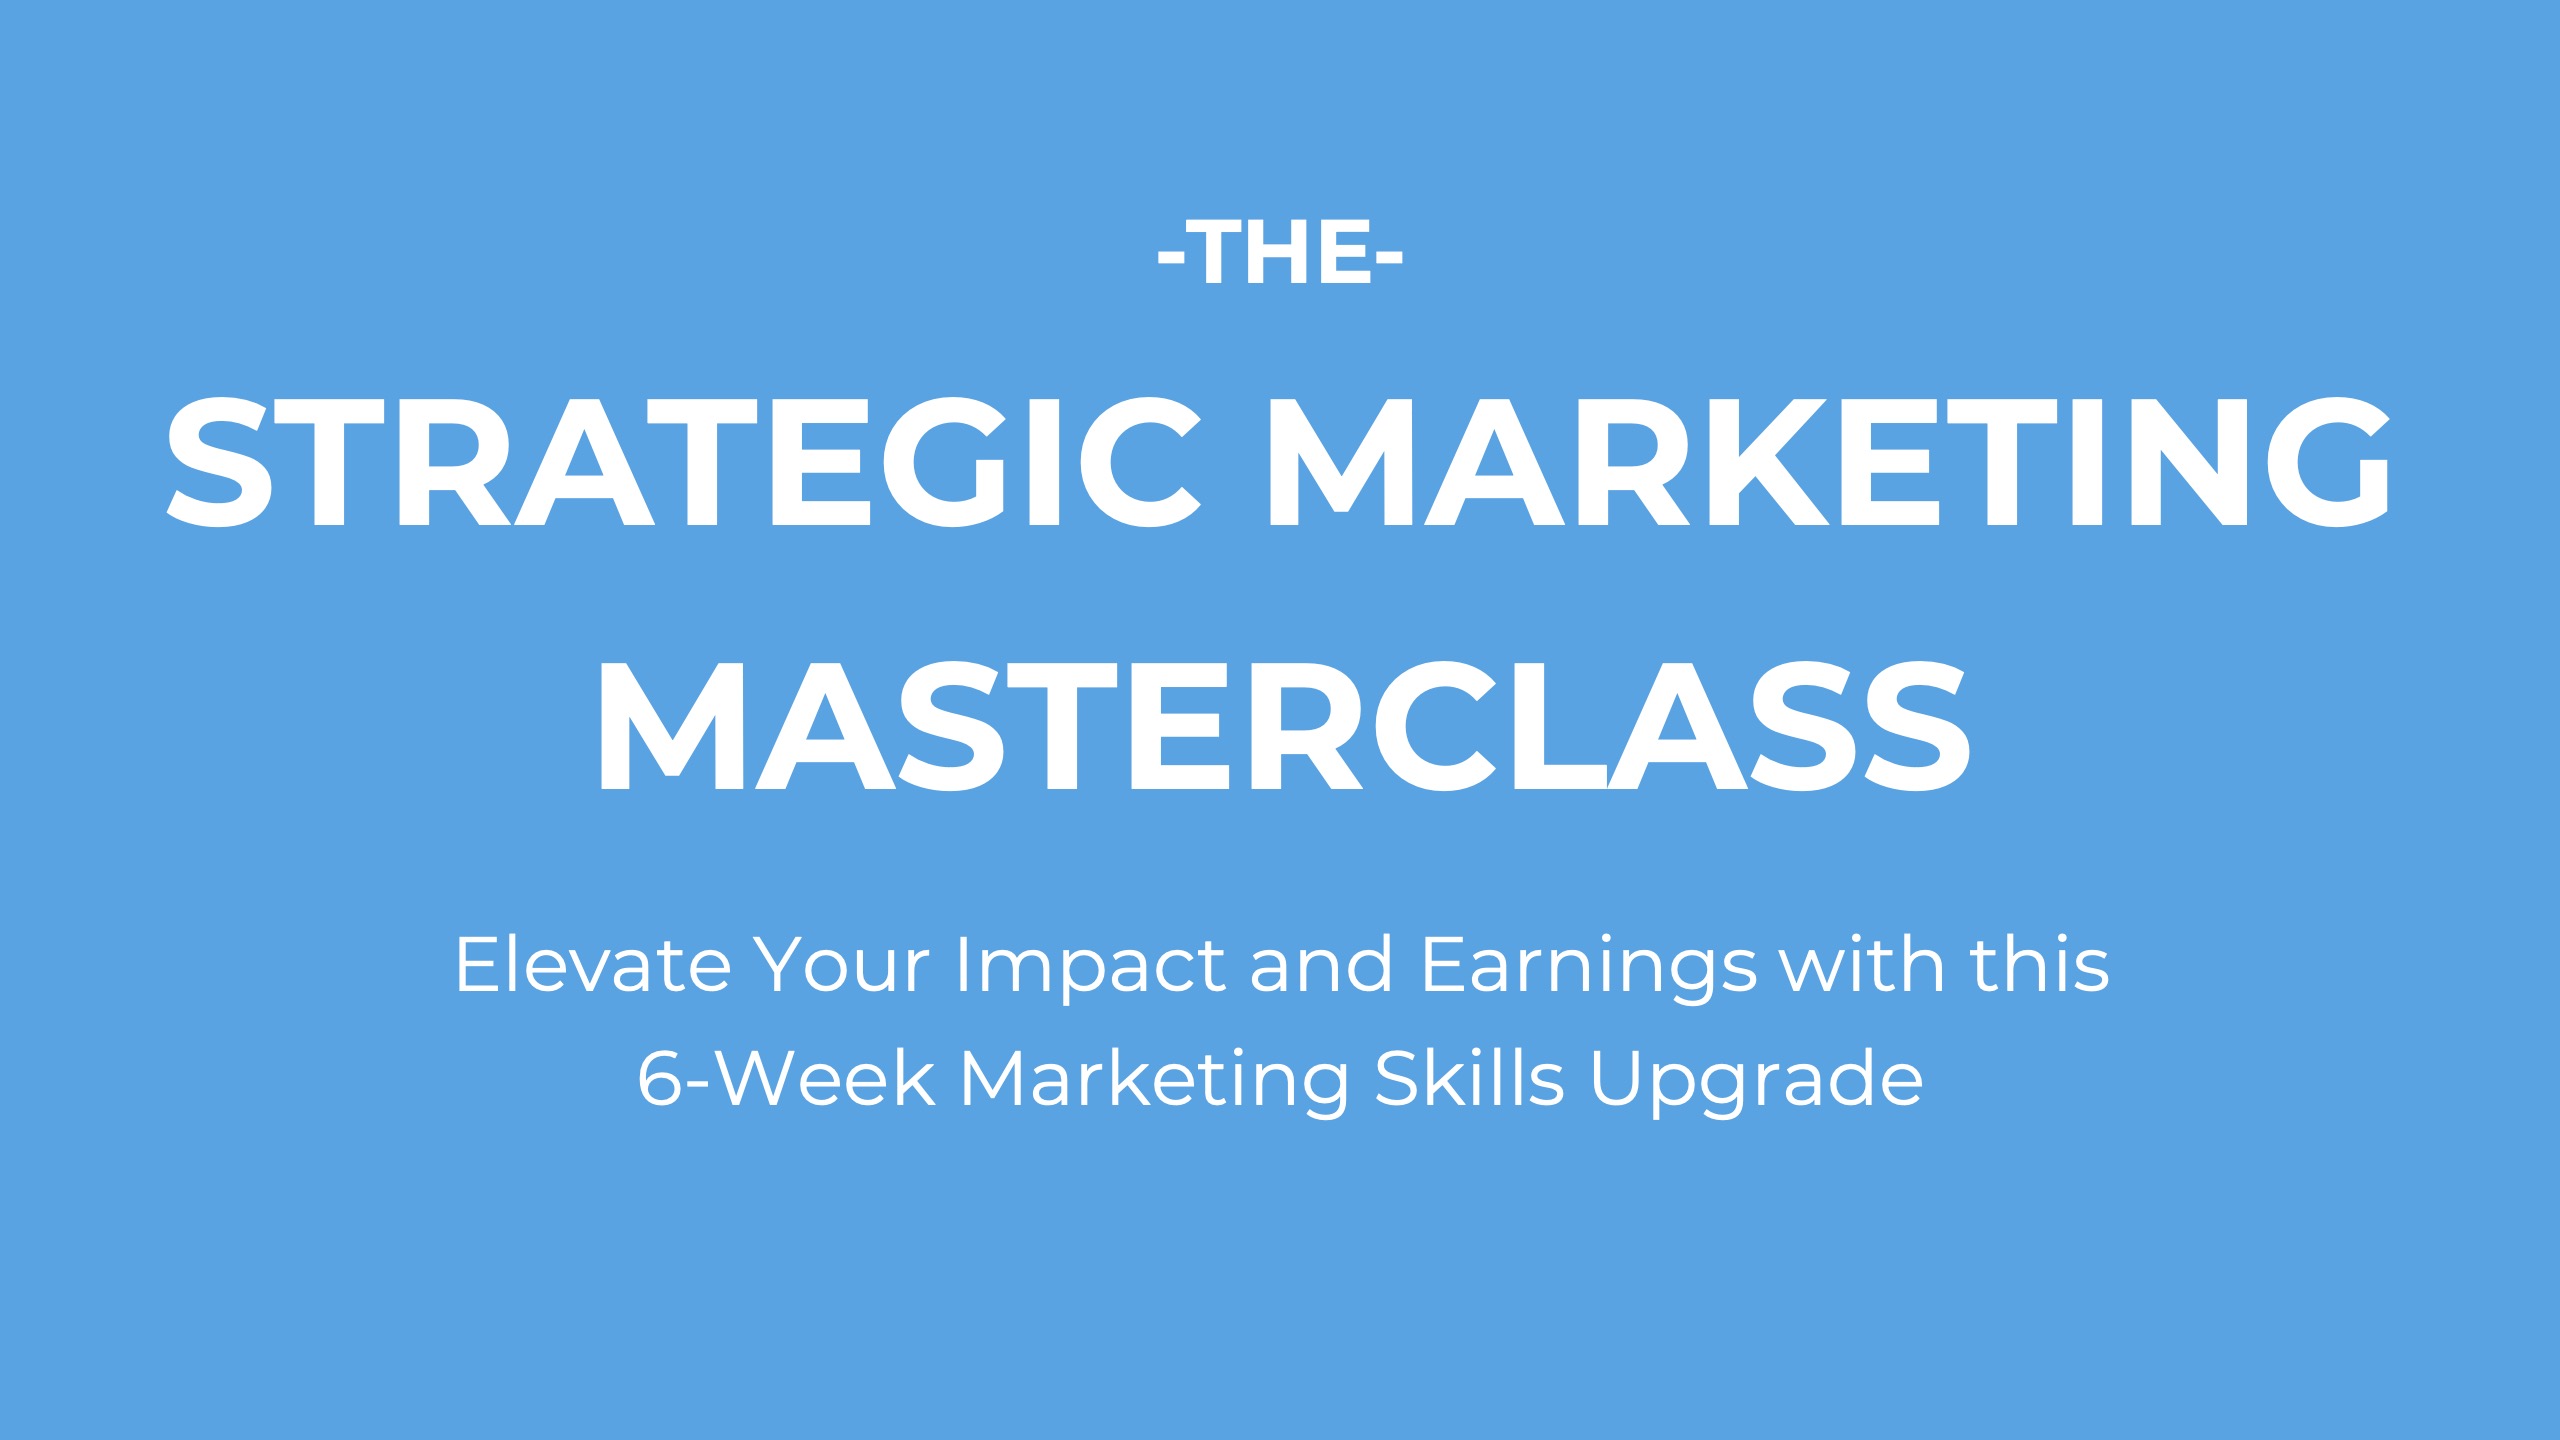 The Strategic Marketing Masterclass